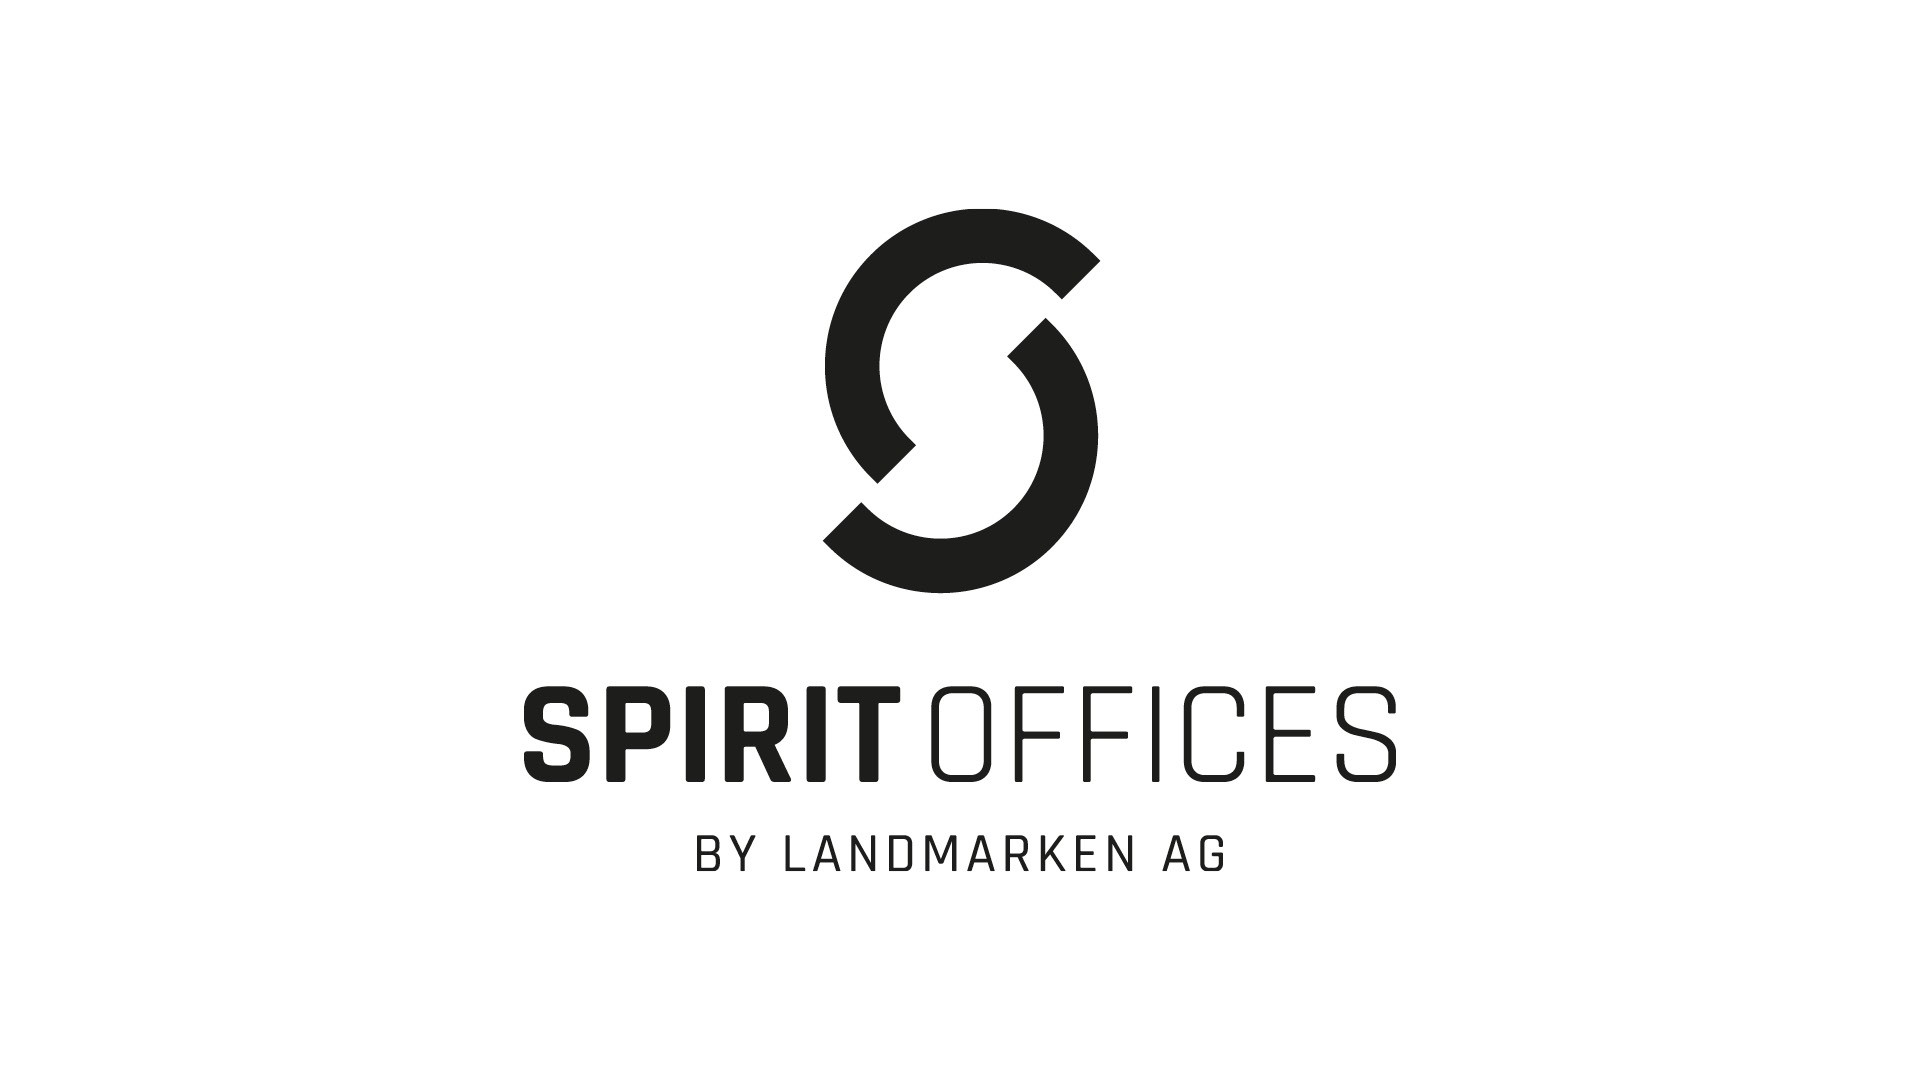 01_Logo_LANDM_Spiritoffices1.jpg
				